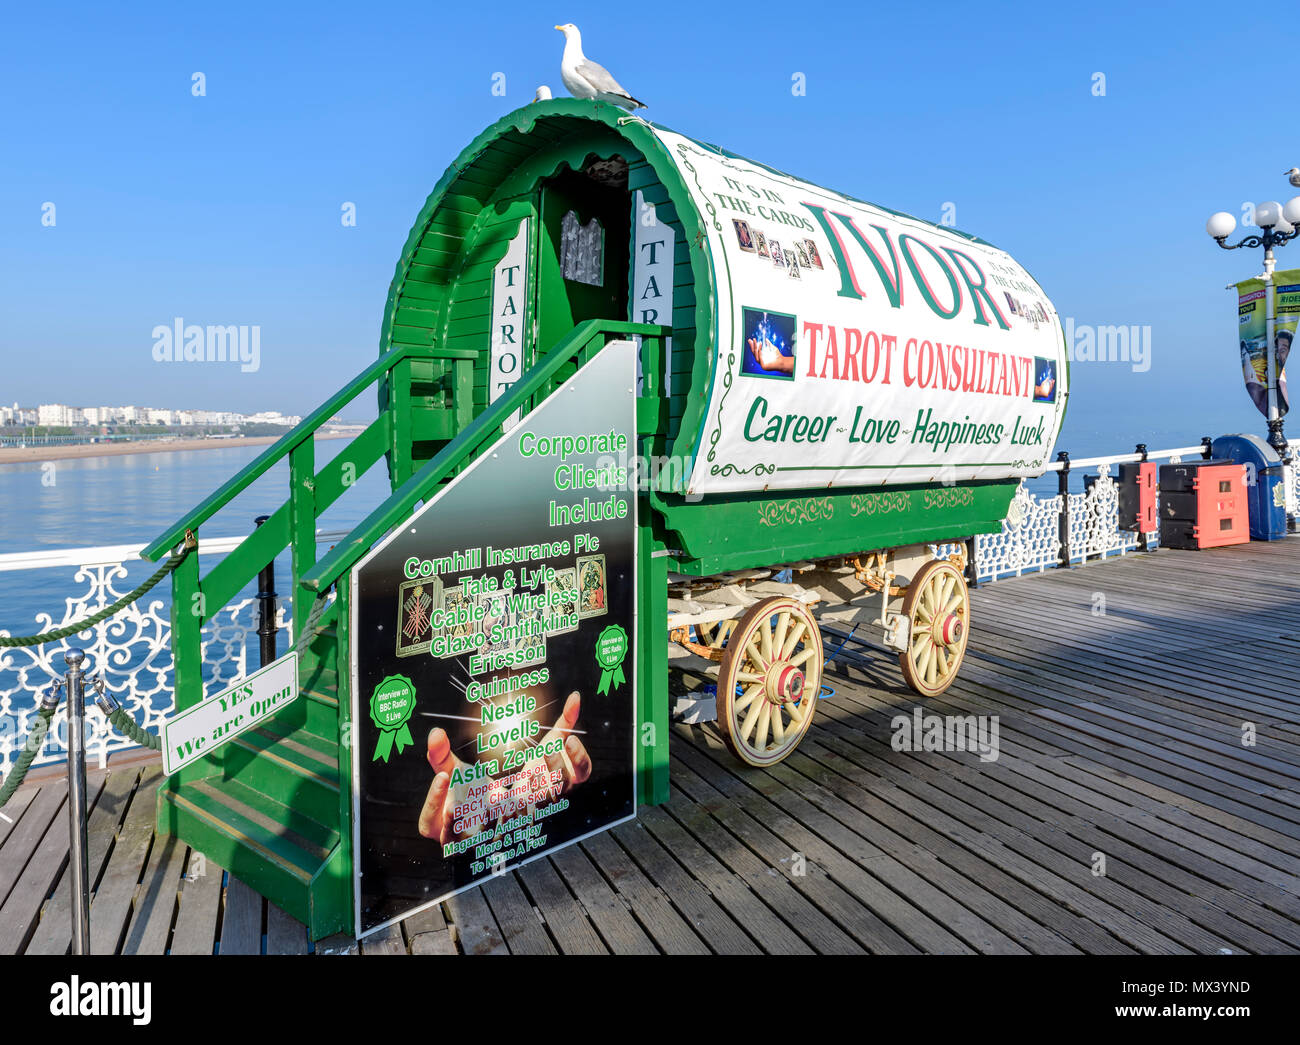 Ivor the tarot card consultants caravan on brighton pier Stock Photo